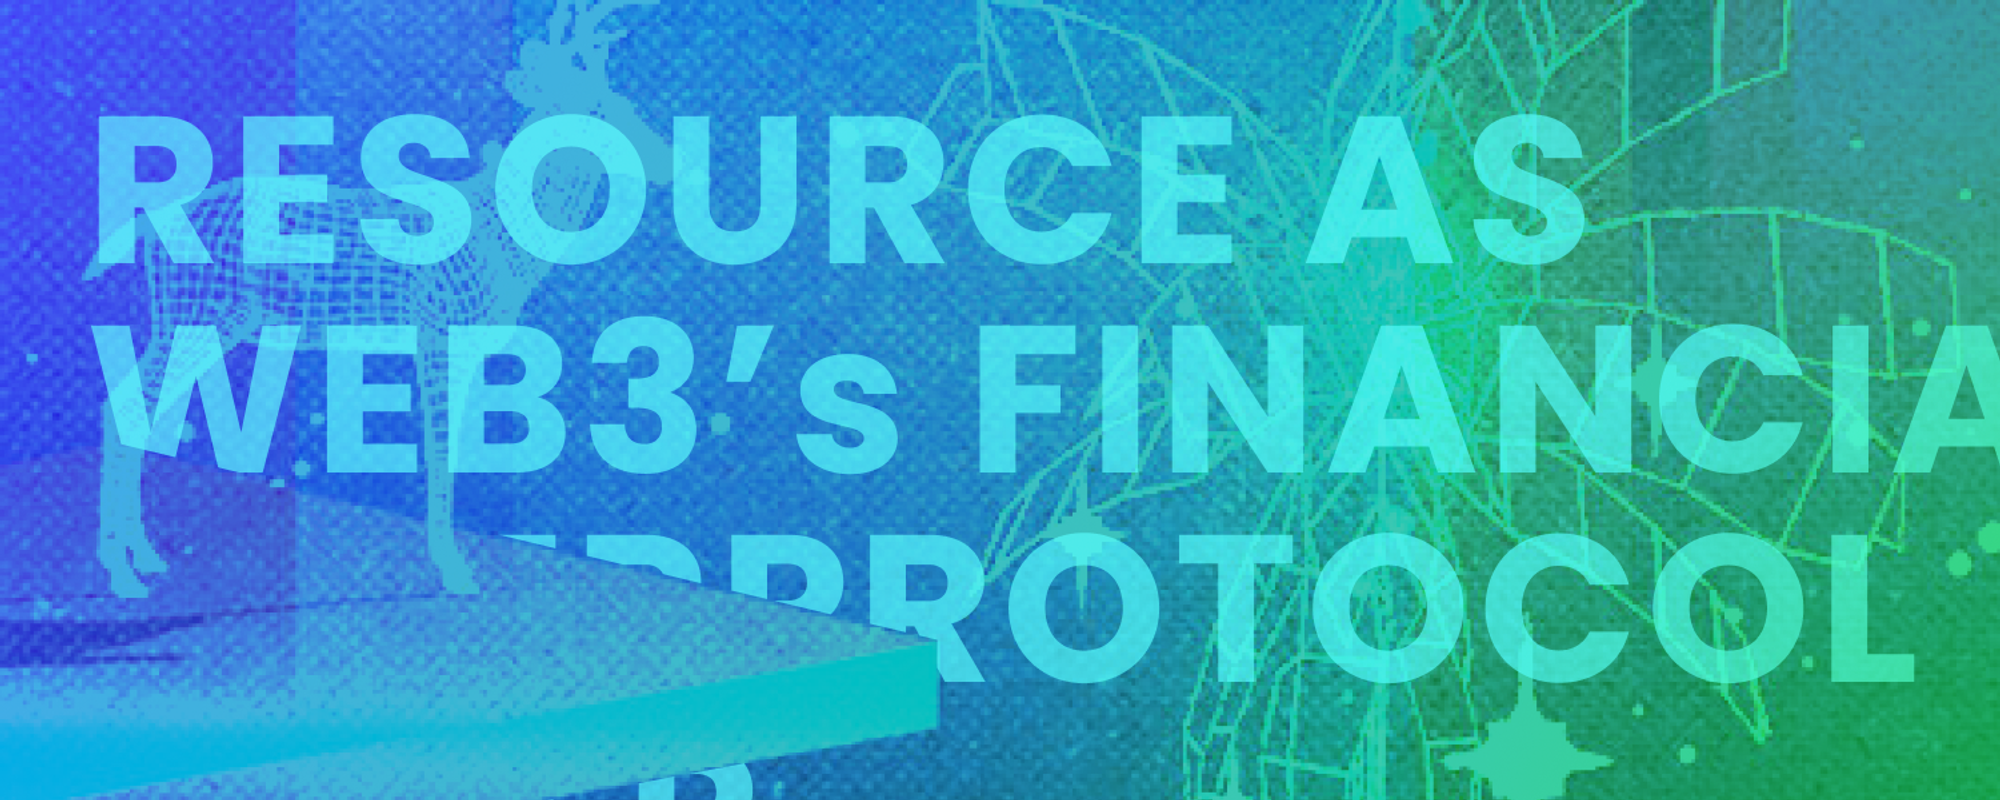 ReSource as Web3's Financial Interprotocol Layer